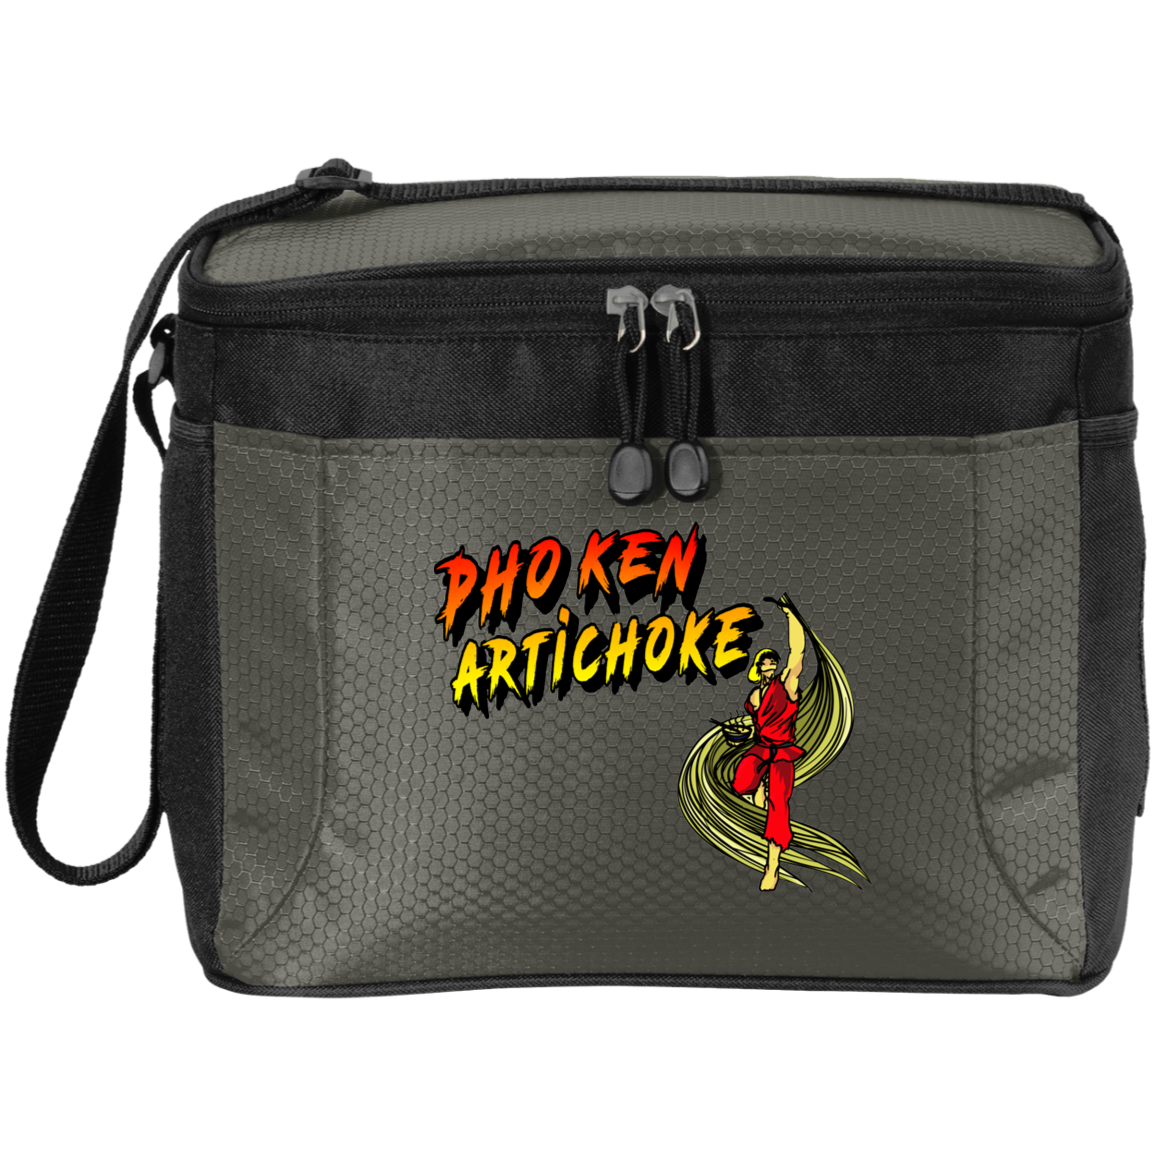 ArtichokeUSA Custom Design. Pho Ken Artichoke. Street Fighter Parody. Gaming. 12-Pack Cooler